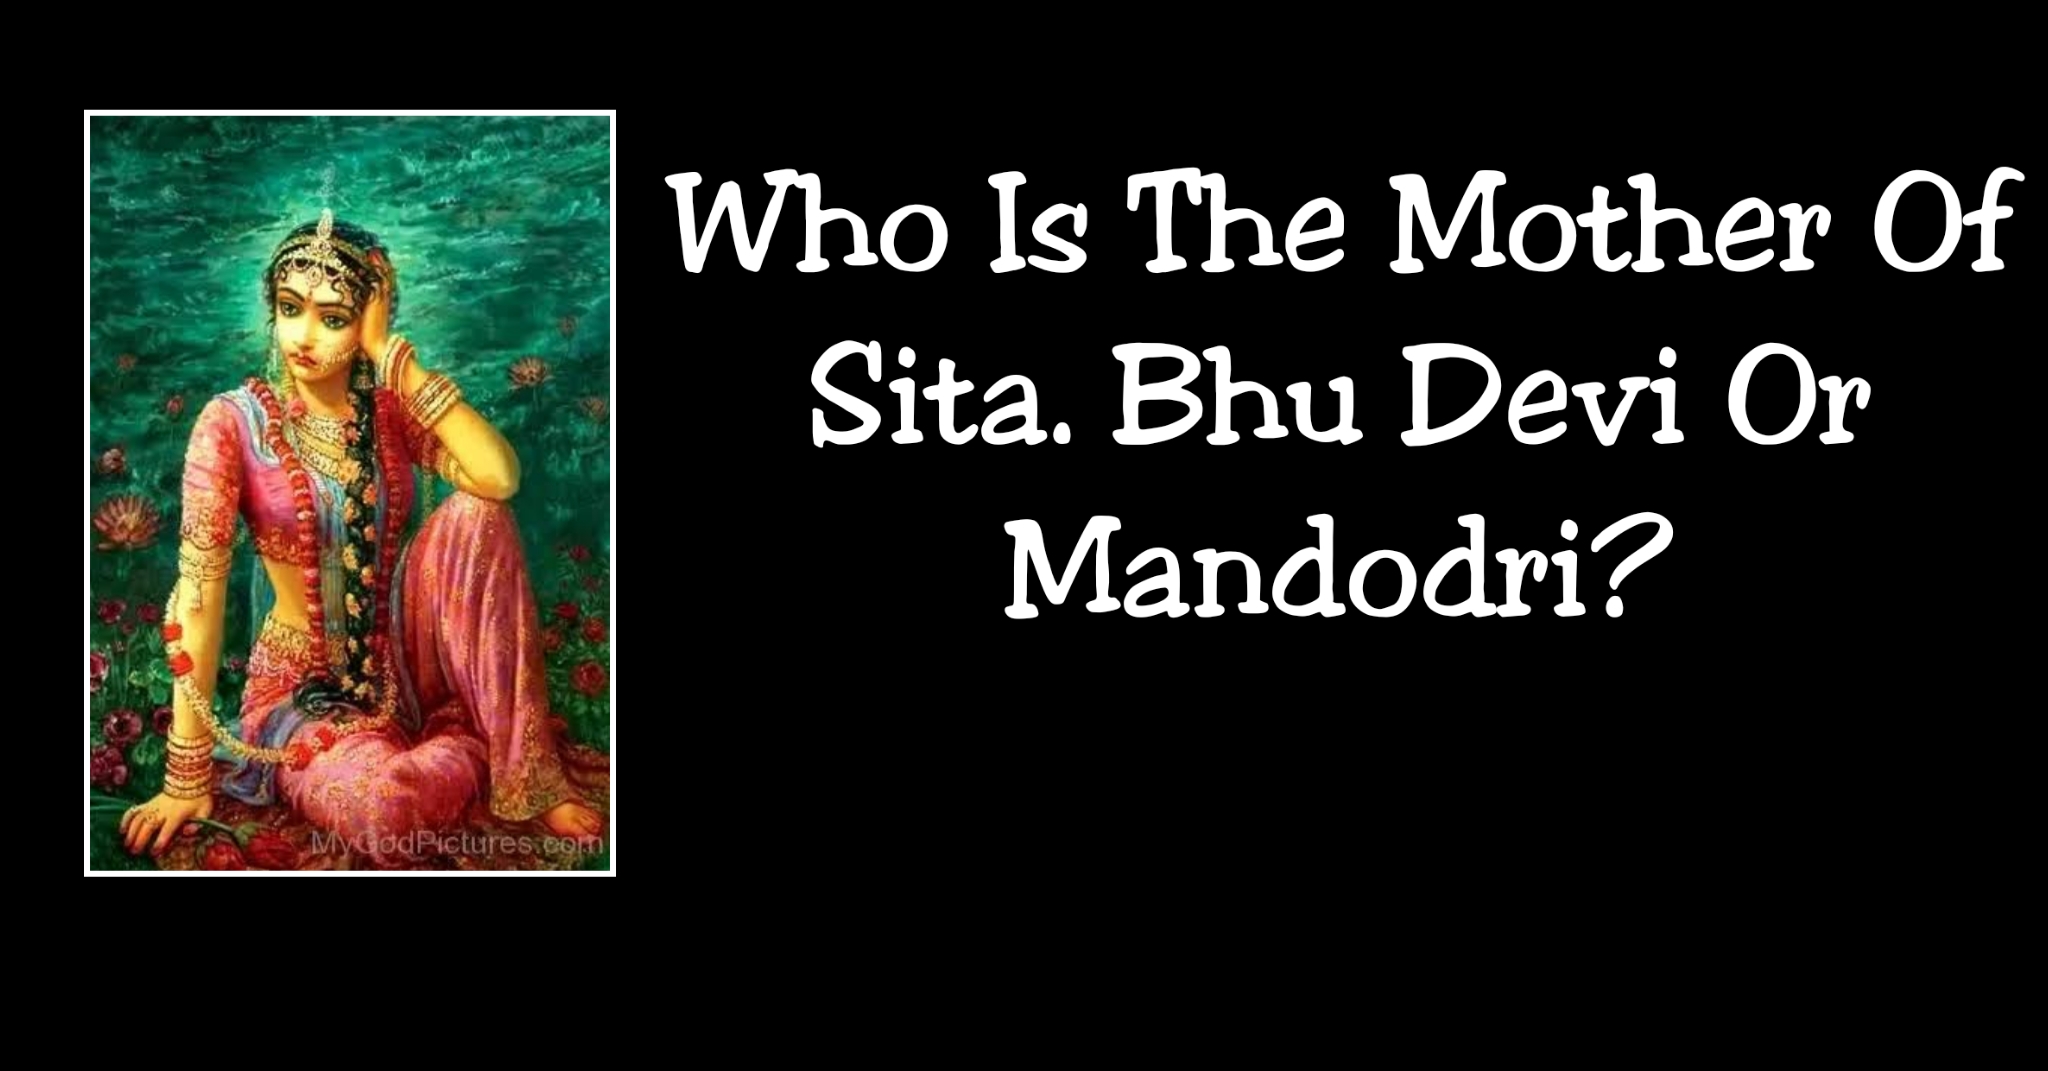 Who Is The Mother Of Sita. Bhu Devi or Mandodri?